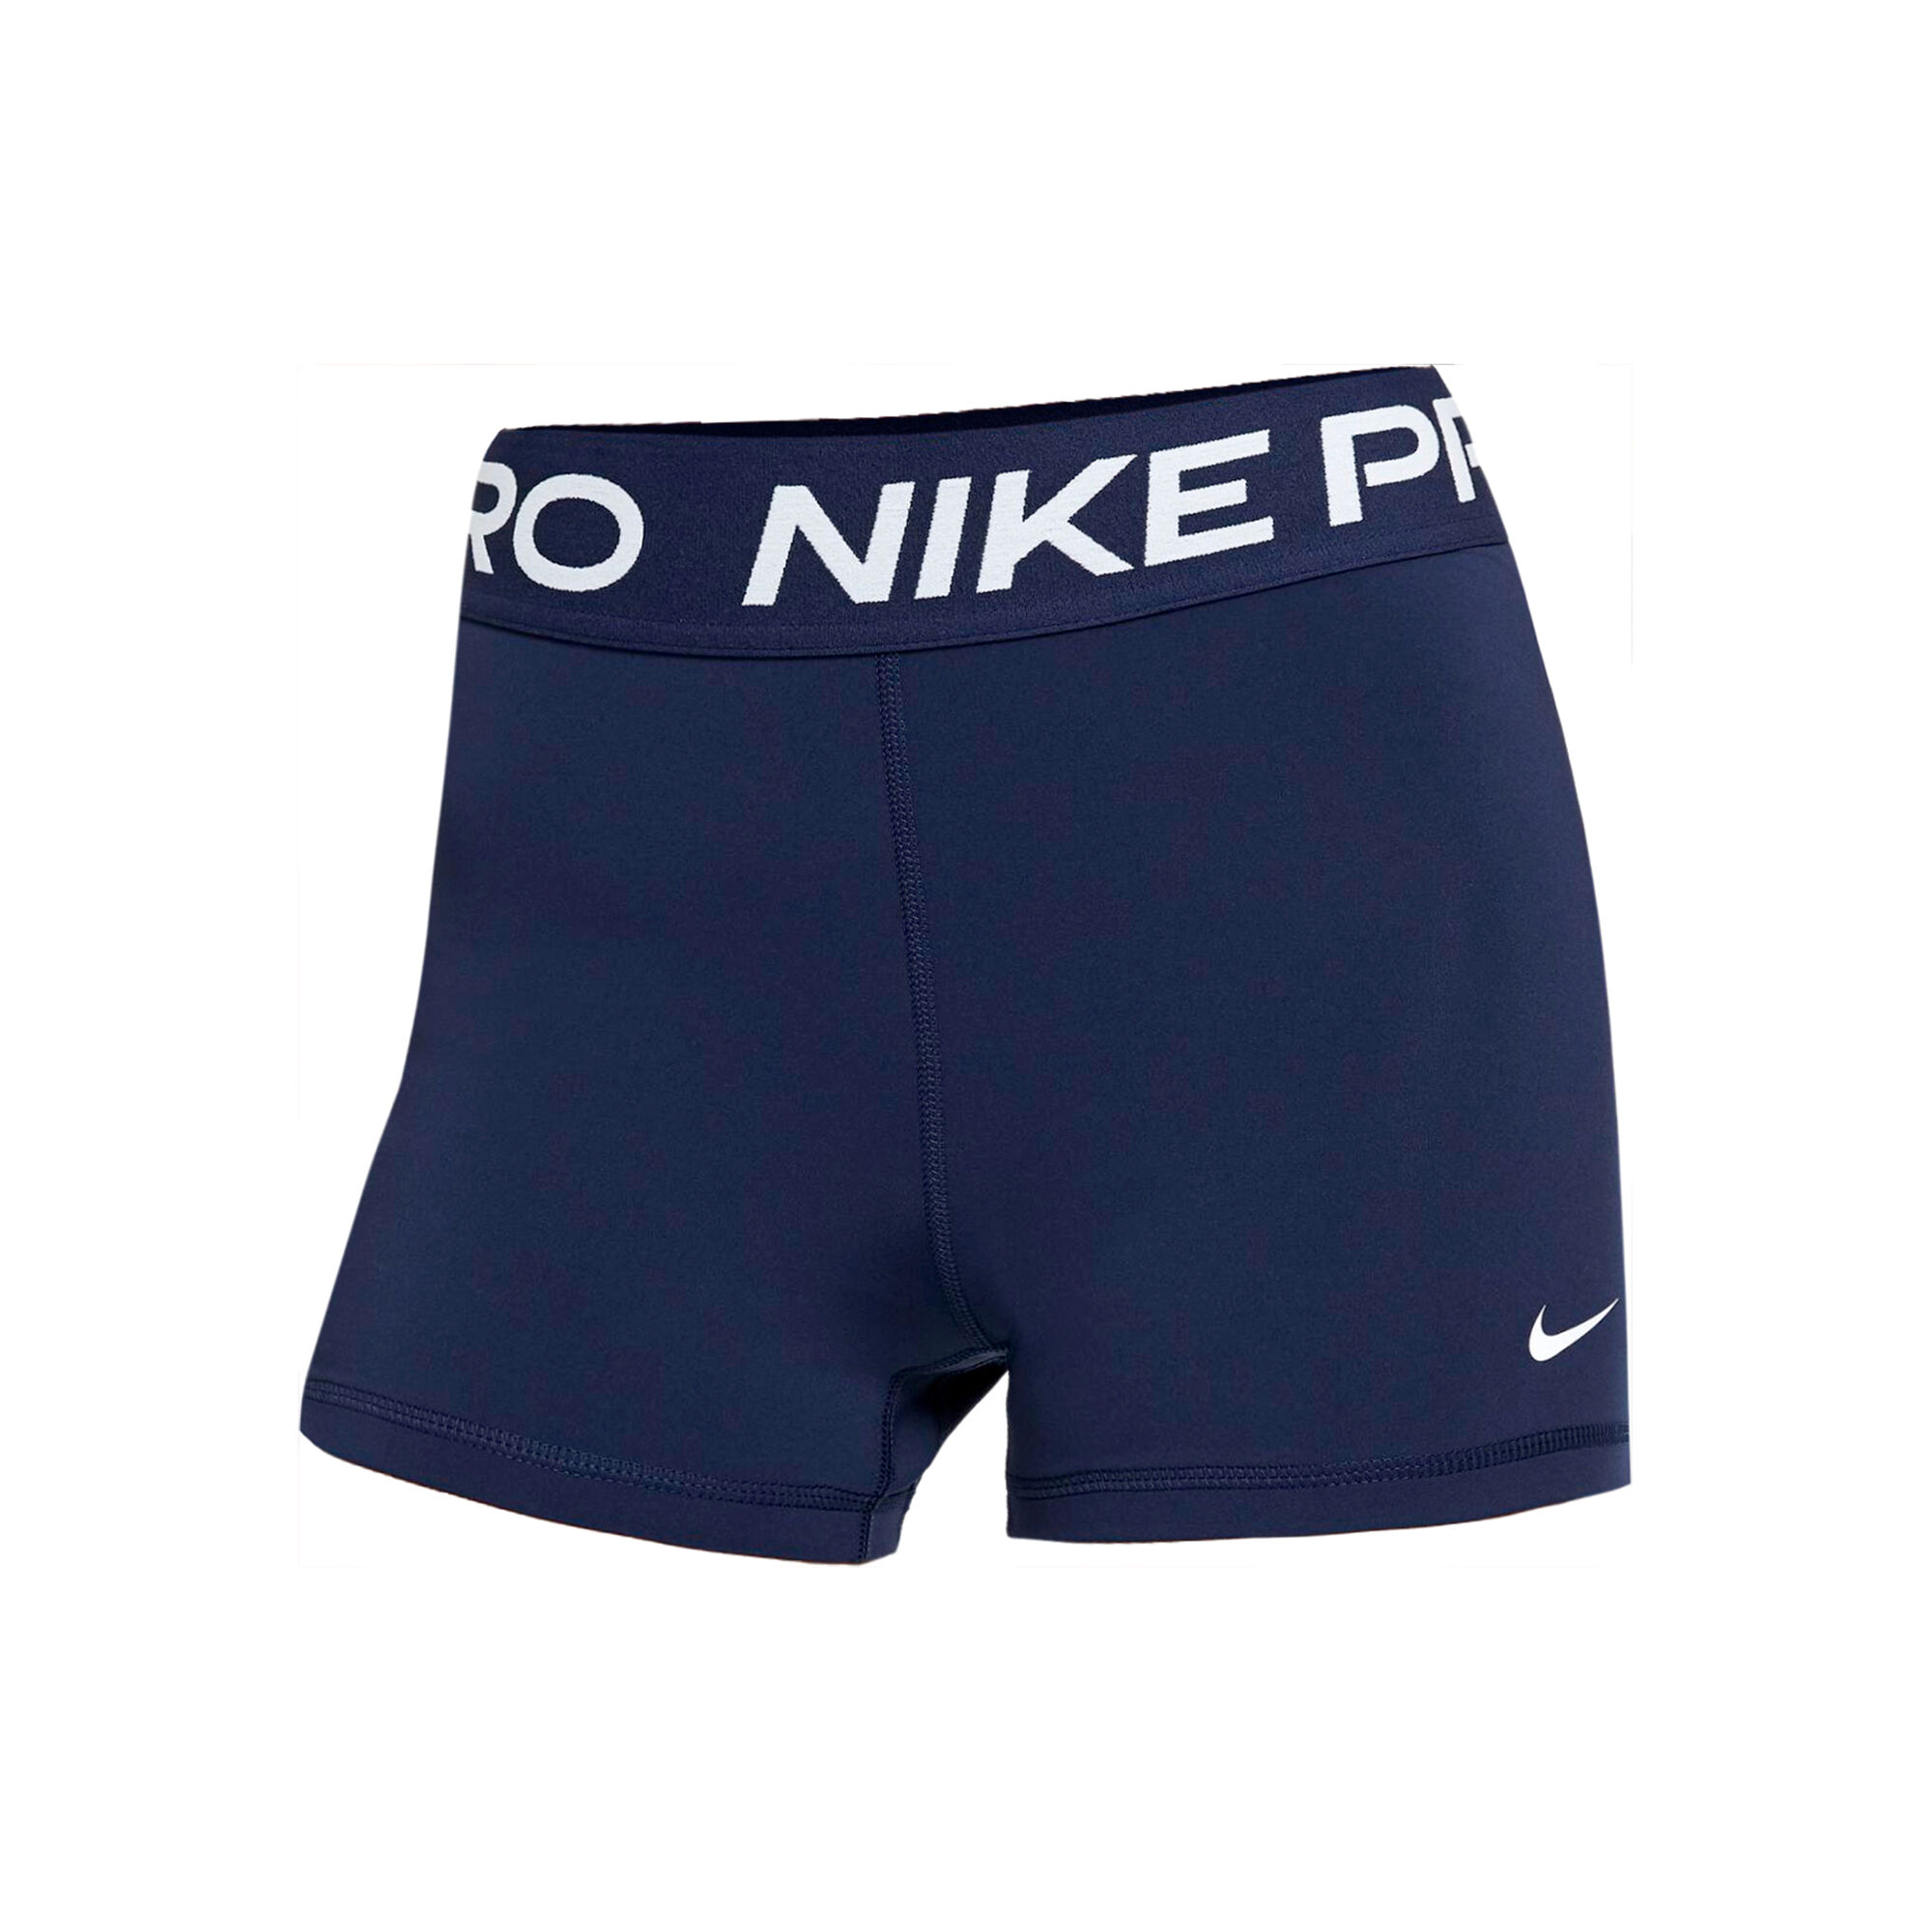 Cool Nike pro shorts